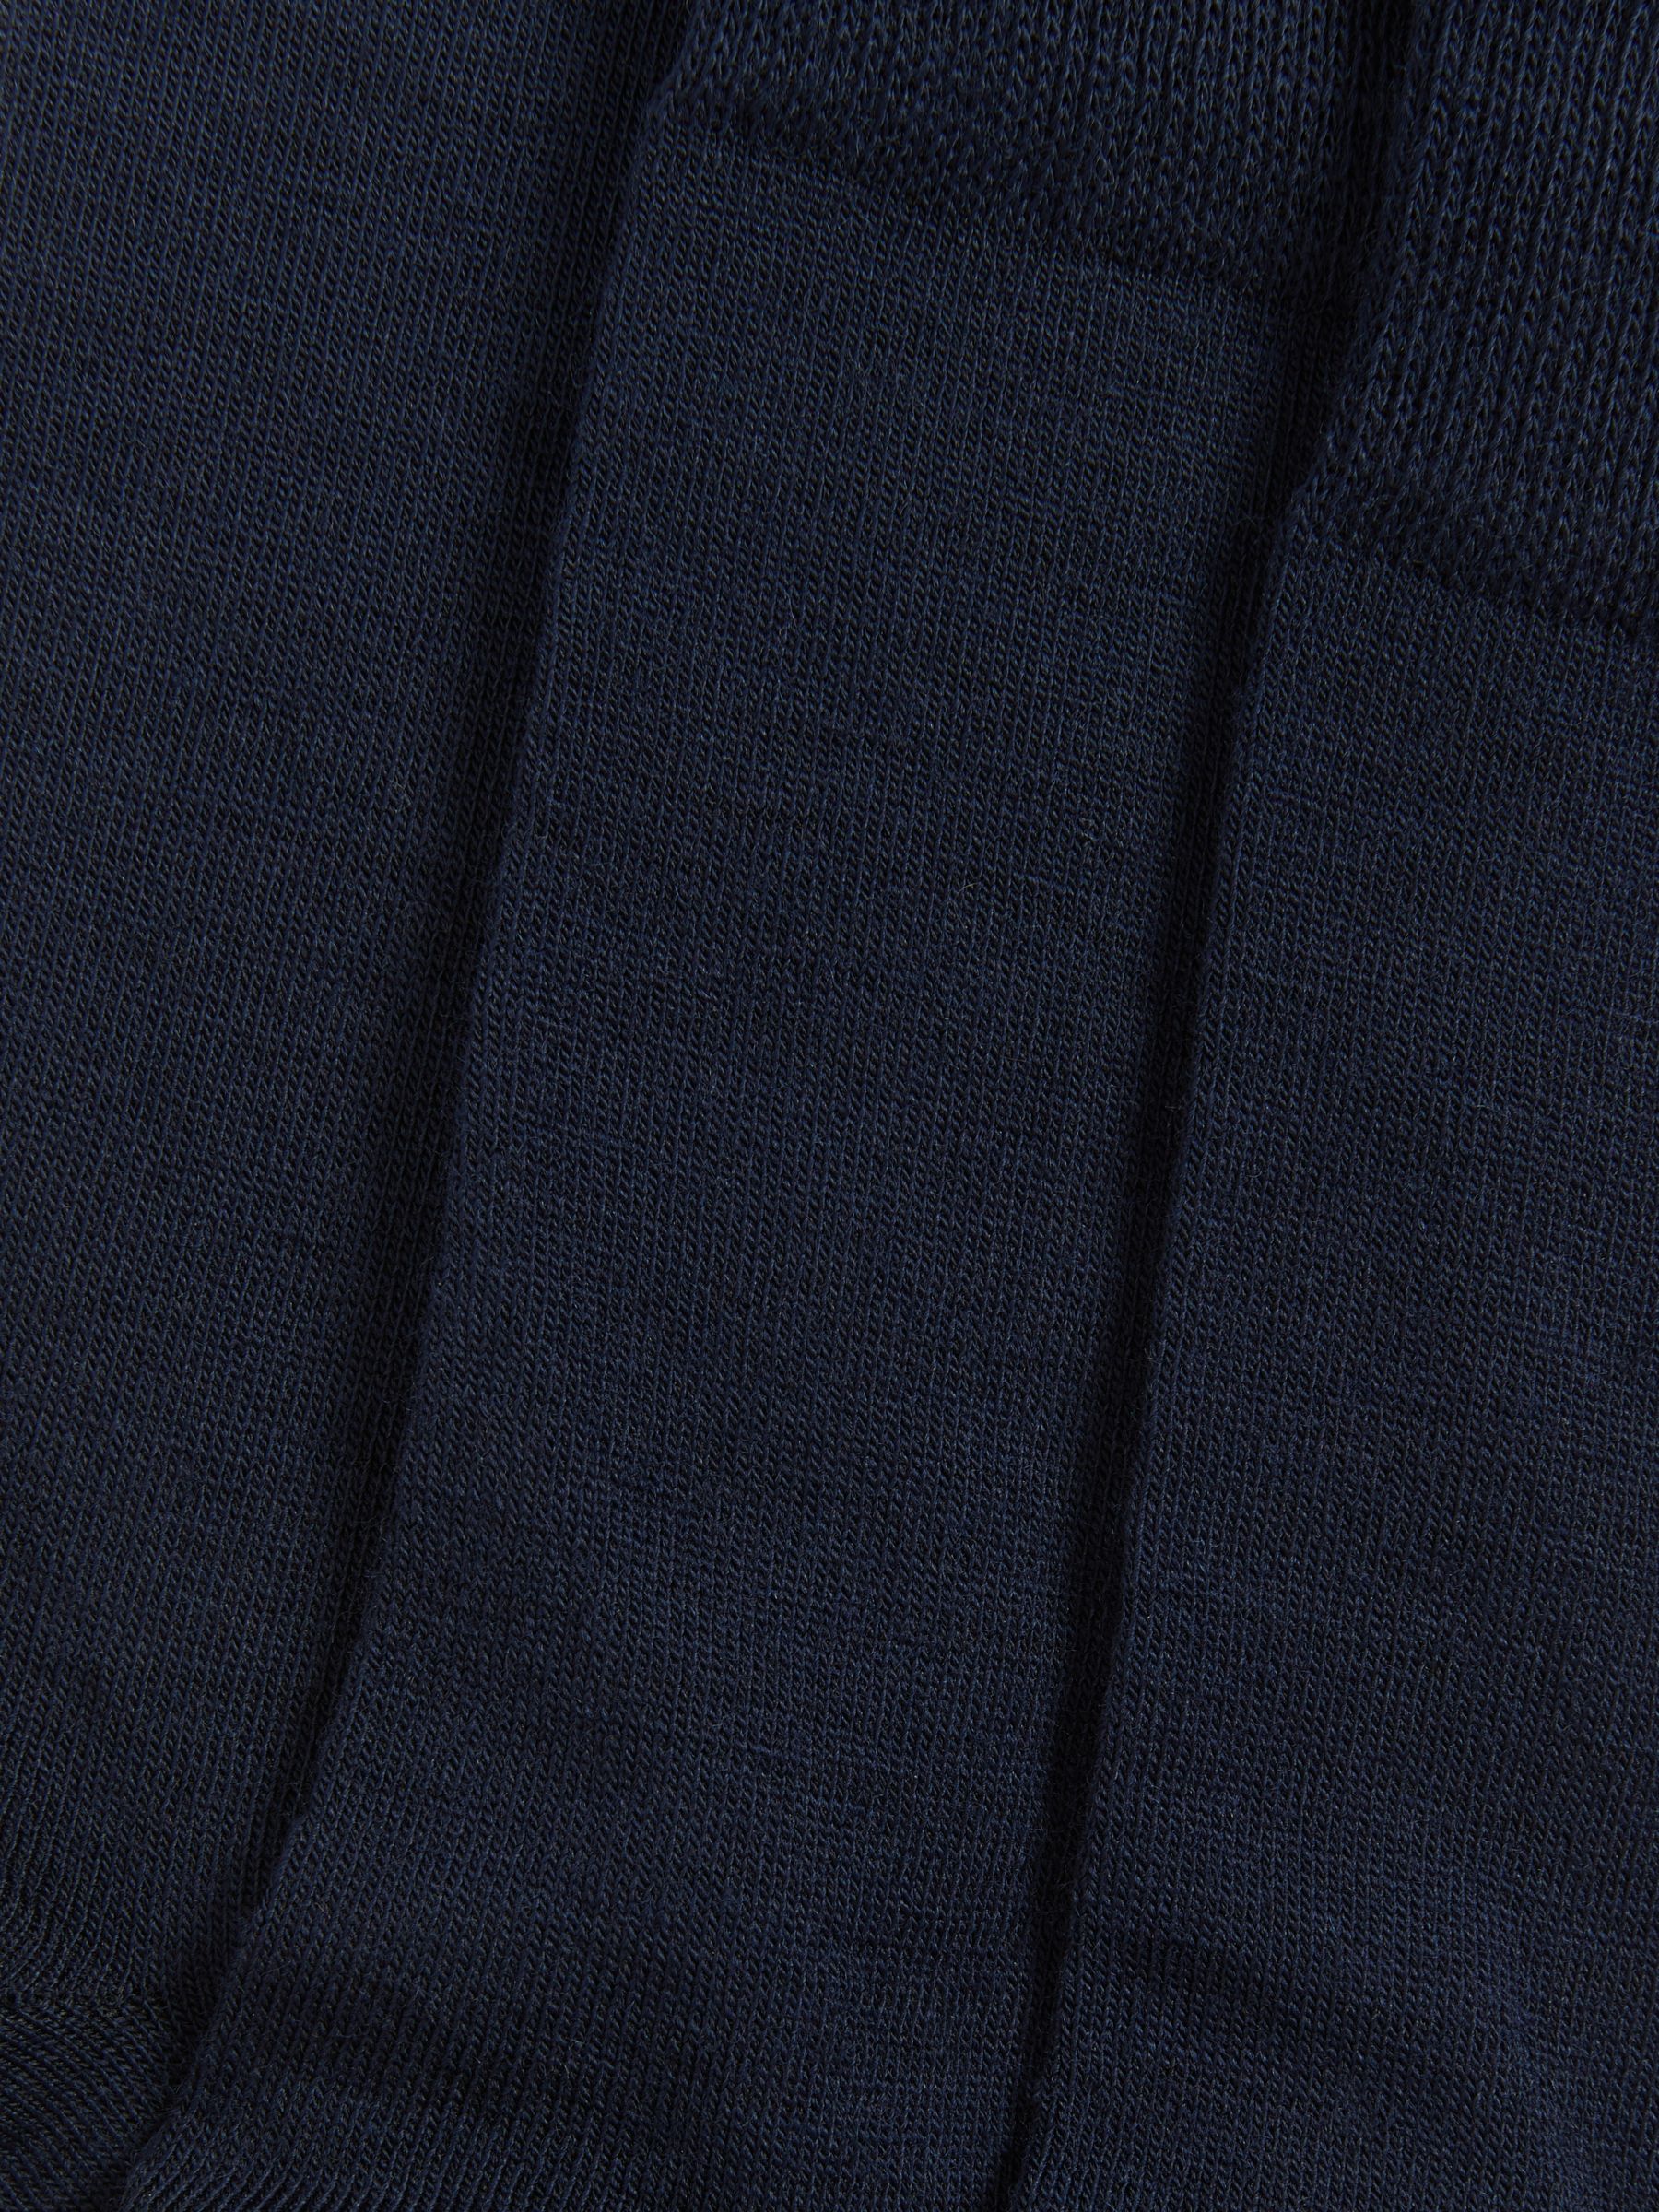 John Lewis Wool Mix Men's Socks, Pack of 3, Navy, S